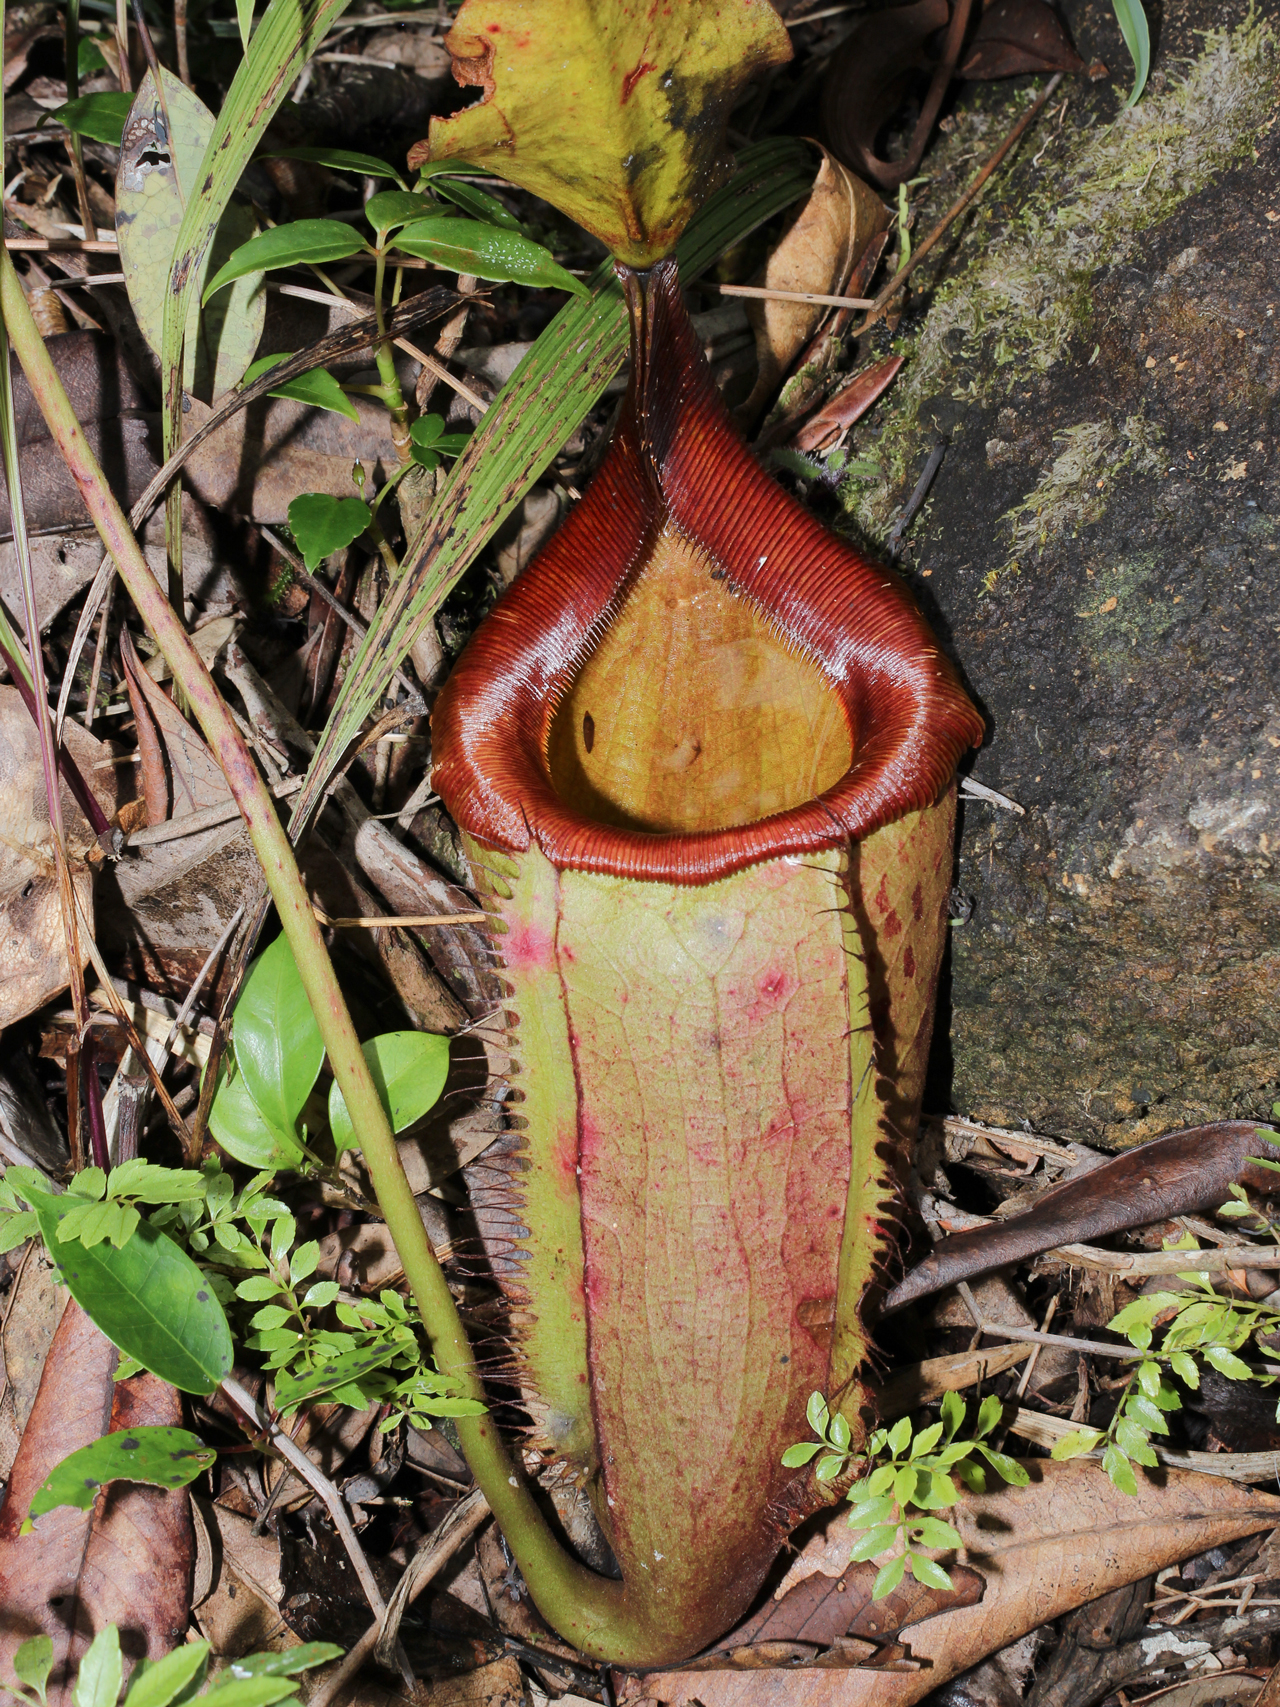 Palawan pitcher plant Nepenthes deaniana photo by Jojo De Peralta